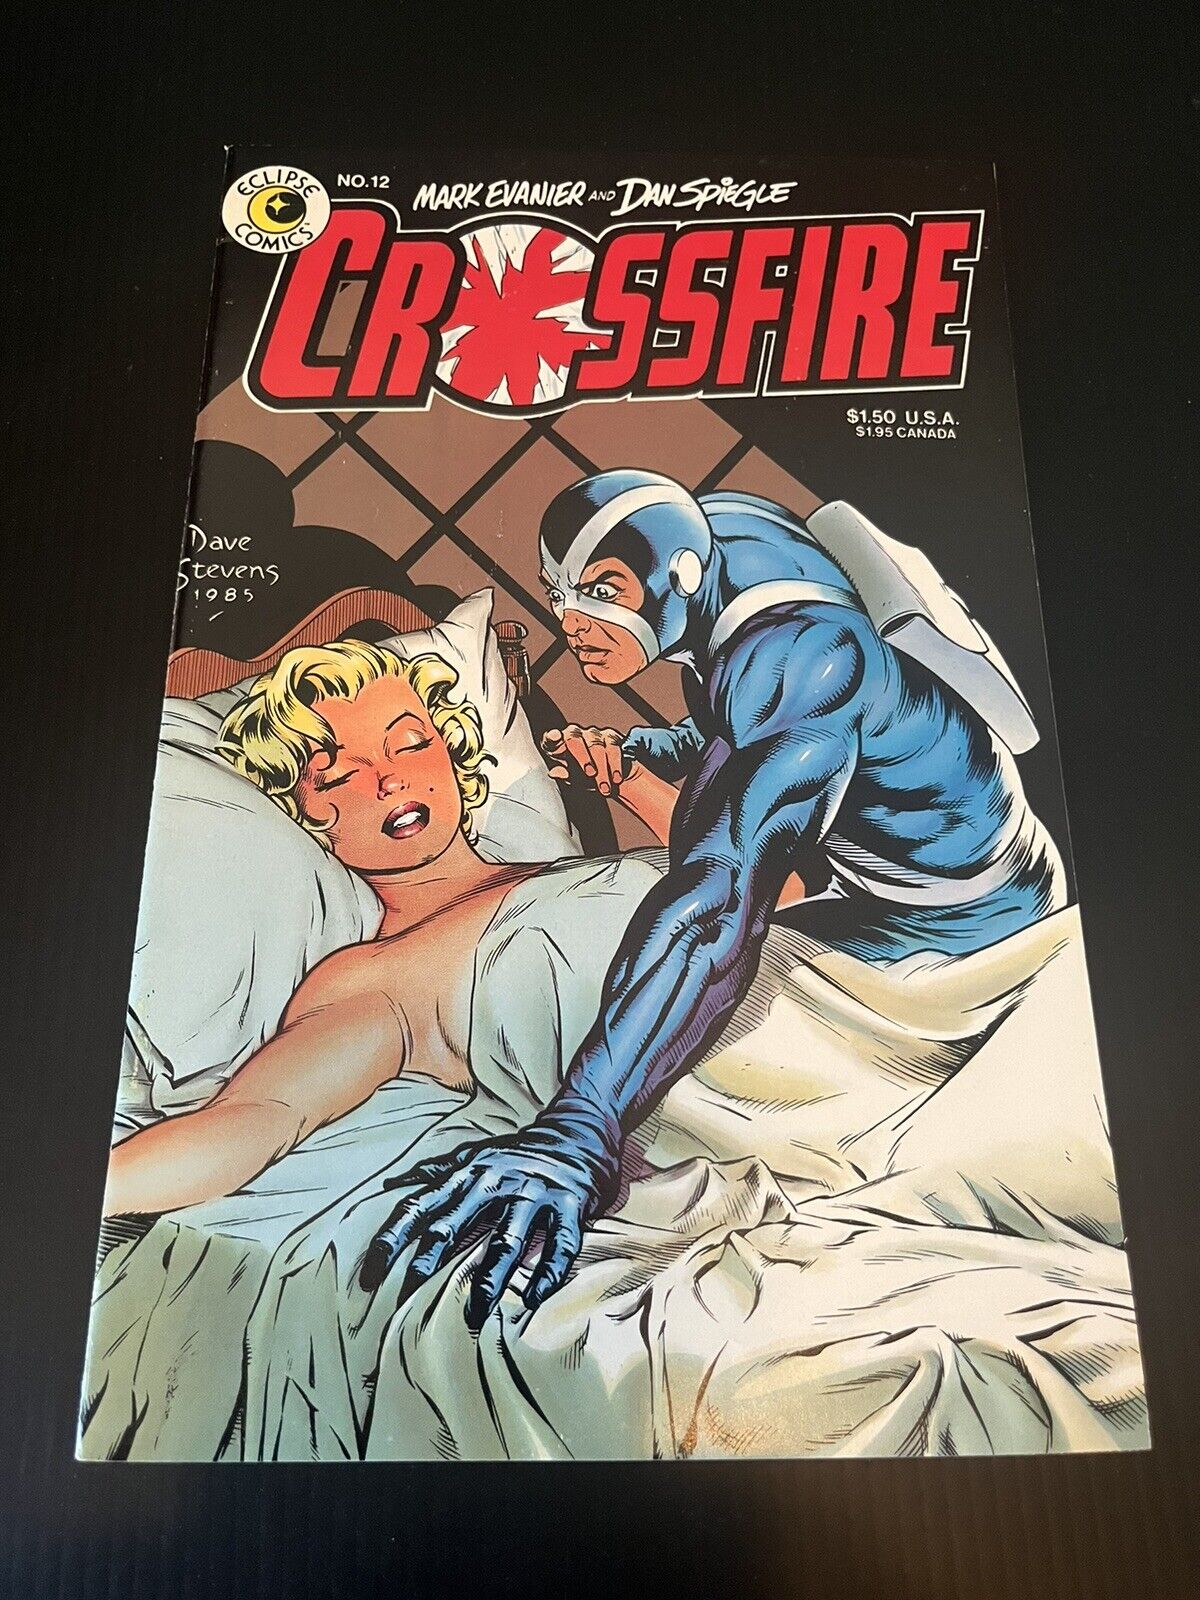 Crossfire #12 Eclipse Comics Dave Stevens GGA cover Marilyn Monroe Copper Age